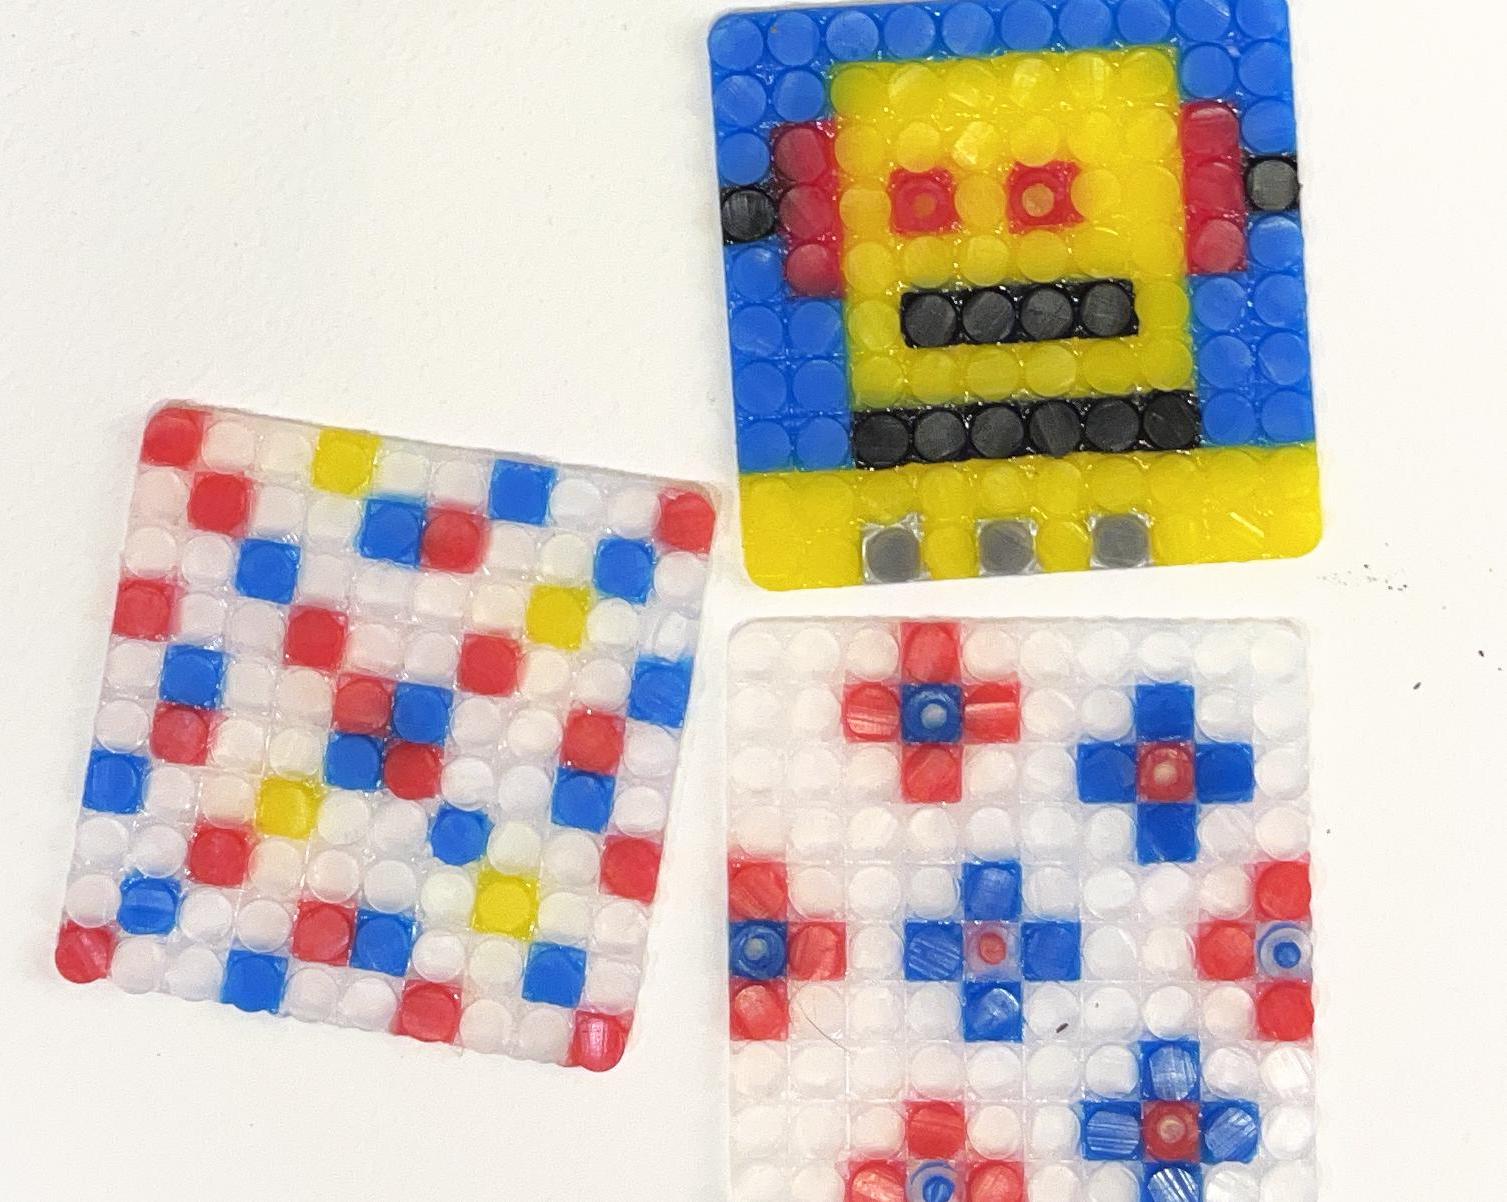 Hot Glue Mosaic Coasters (or Tiles)